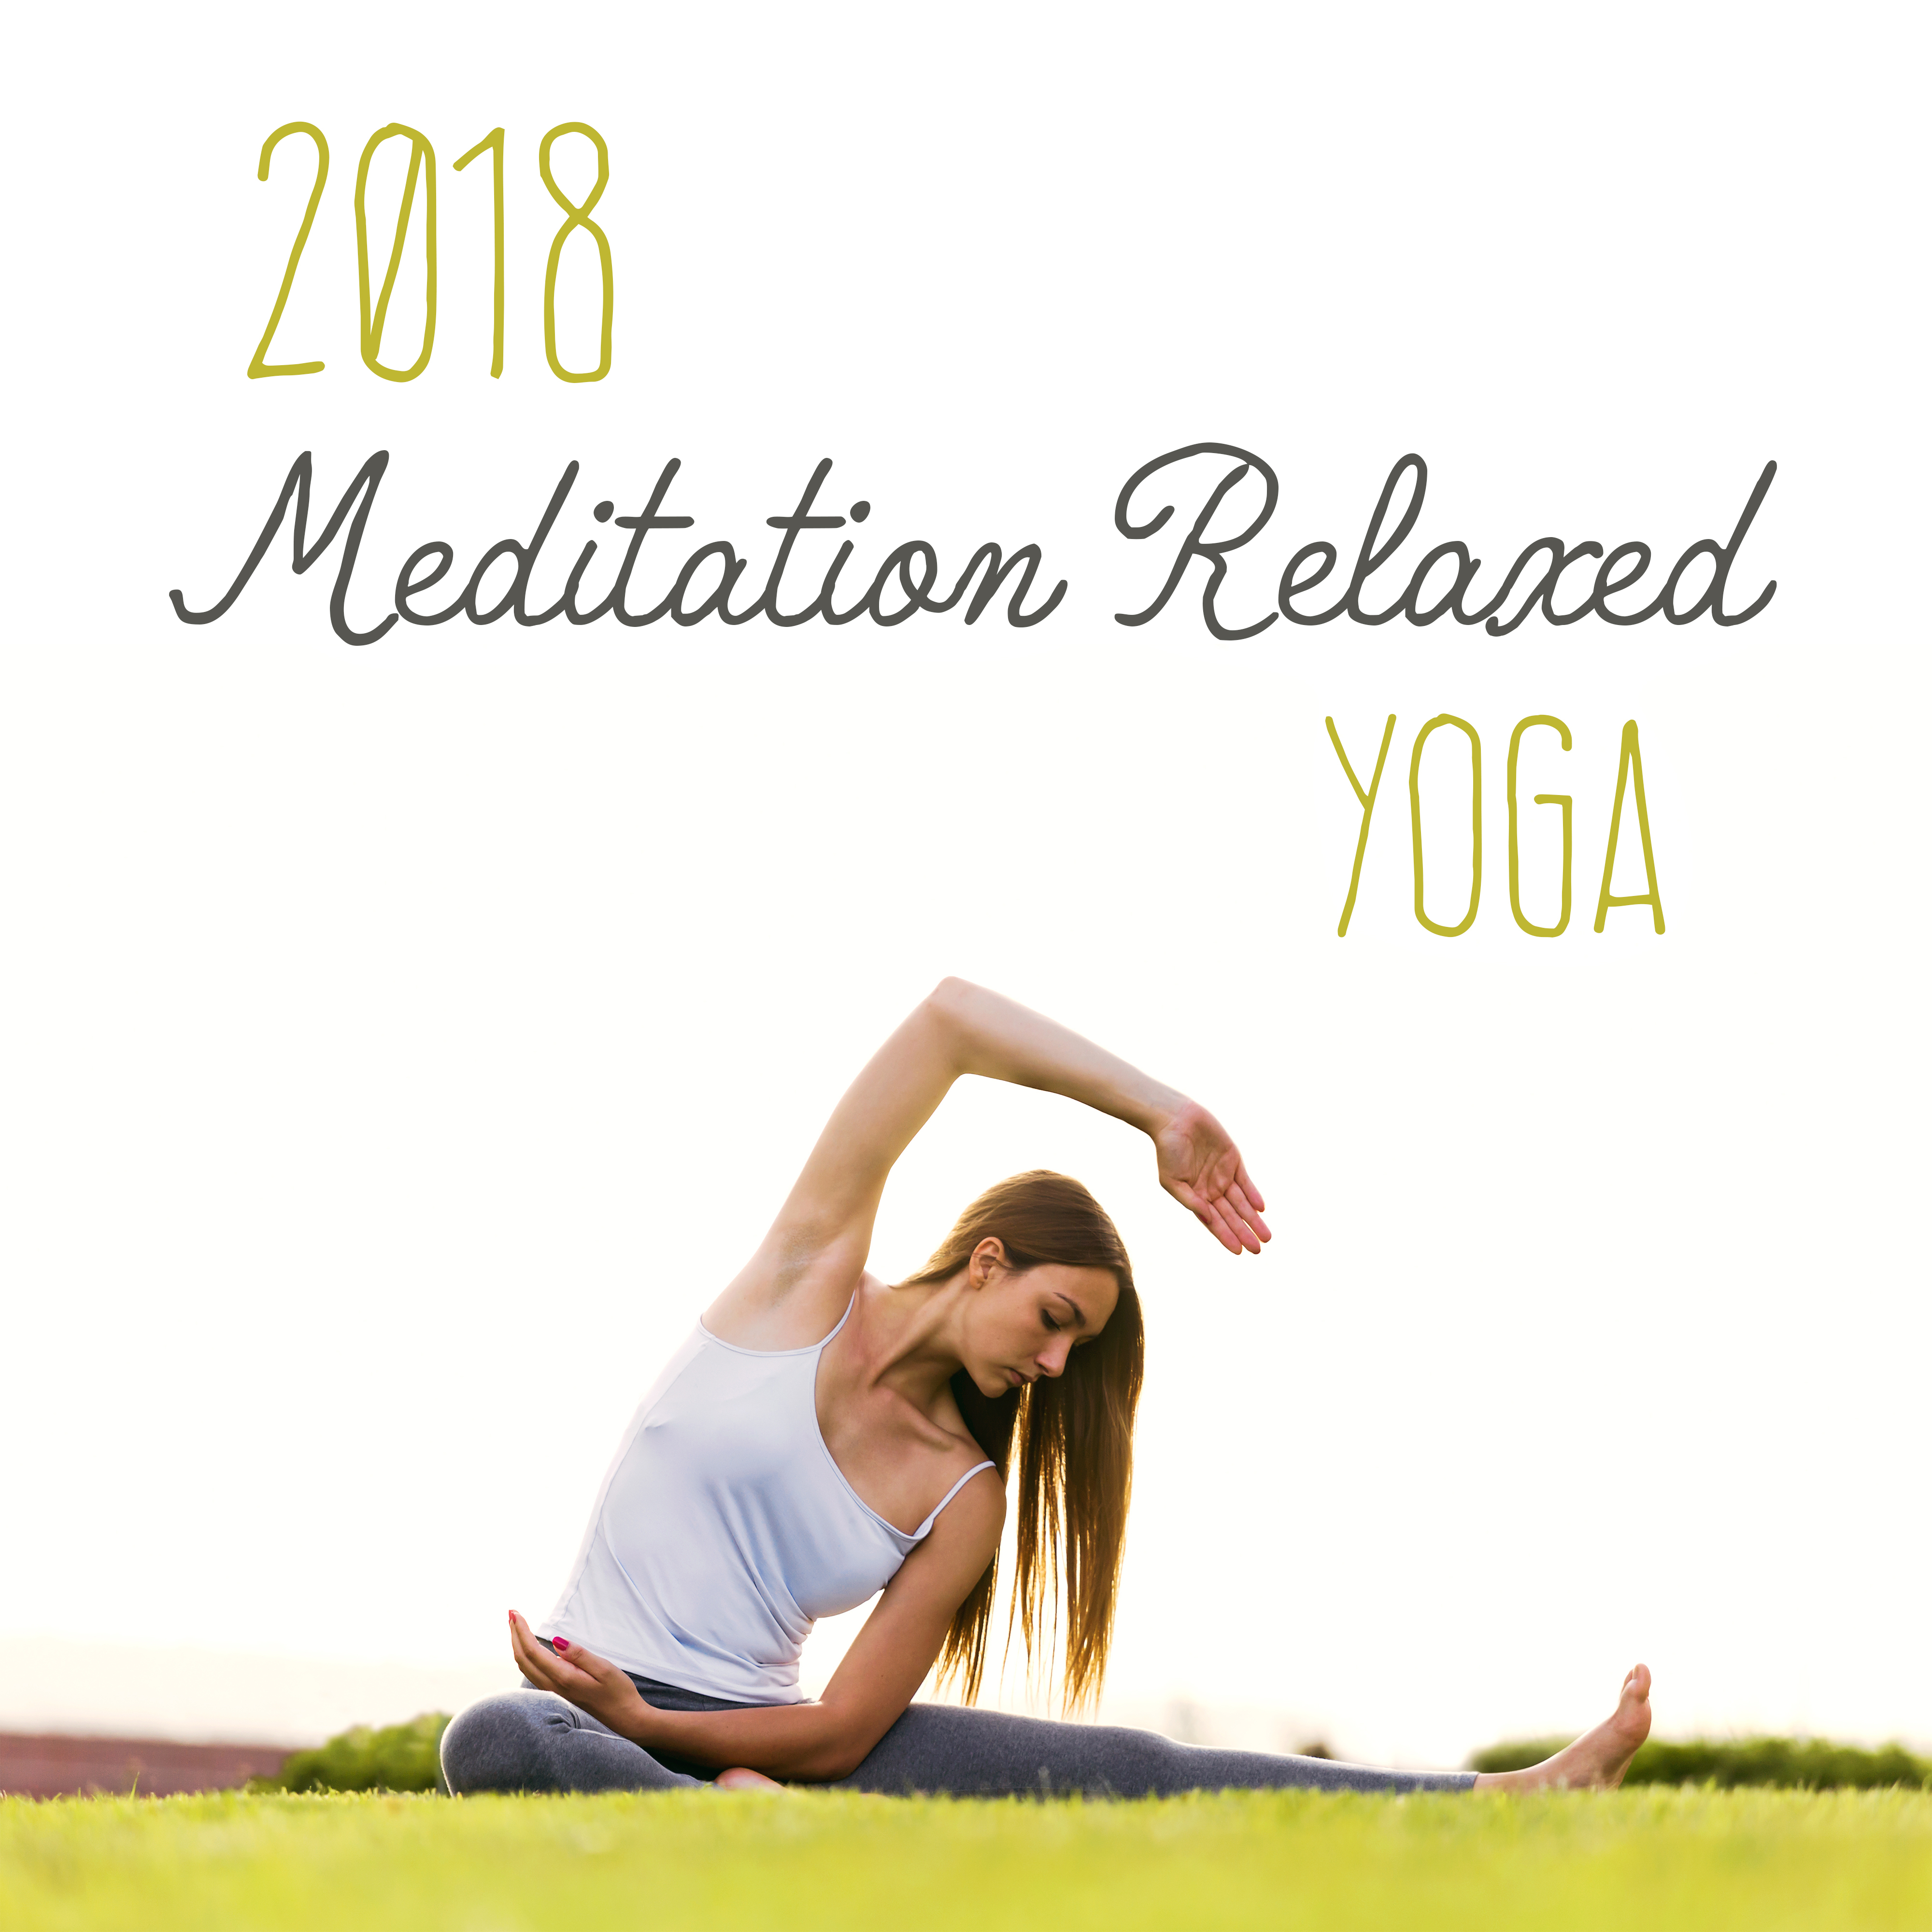 2018 Meditation Relaxed Yoga